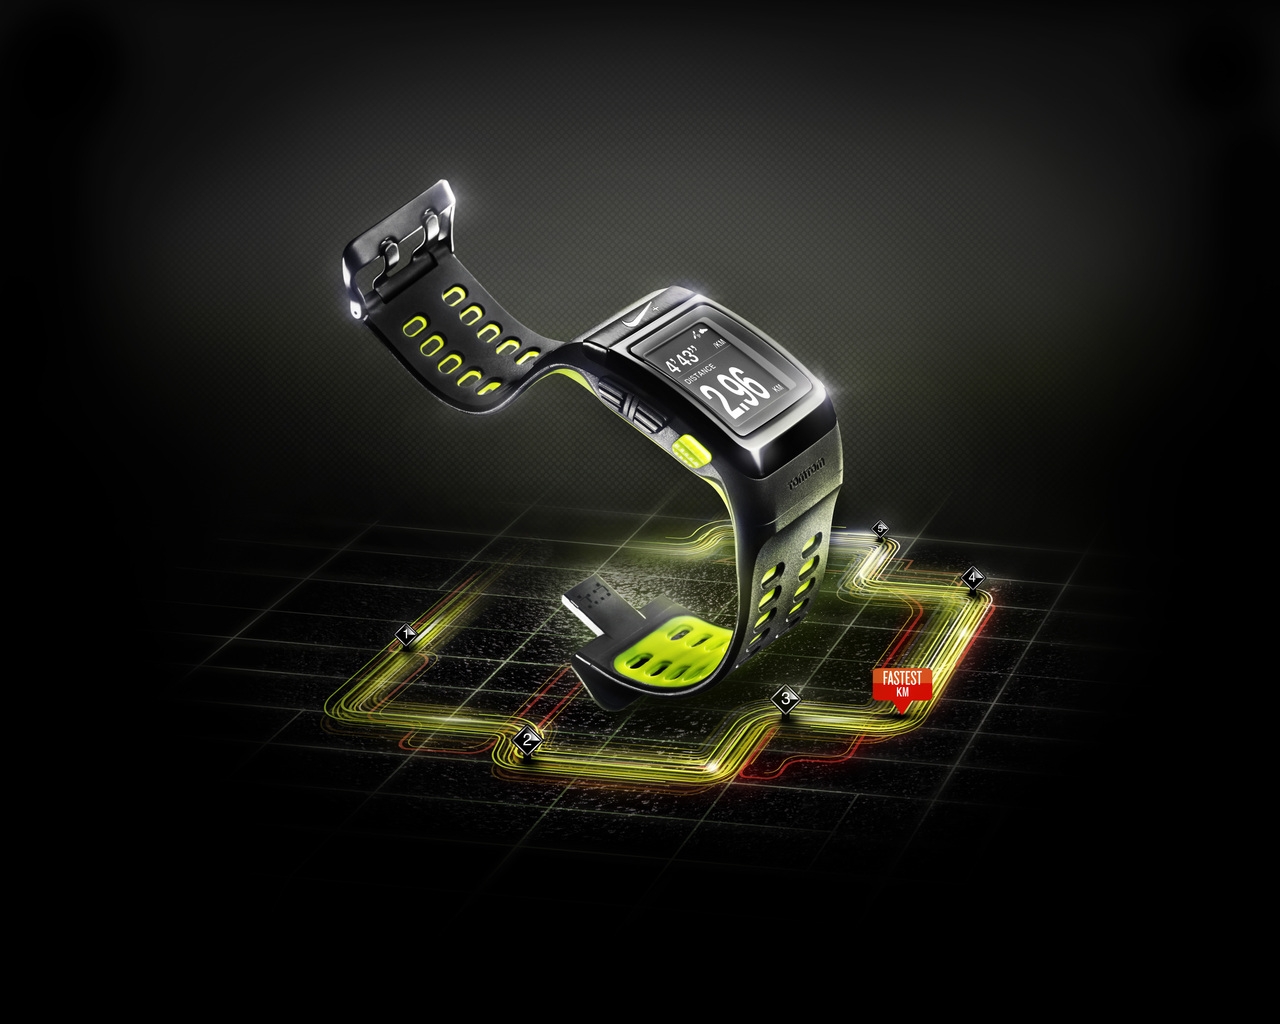 Nike TomTom Navigation for 1280 x 1024 resolution